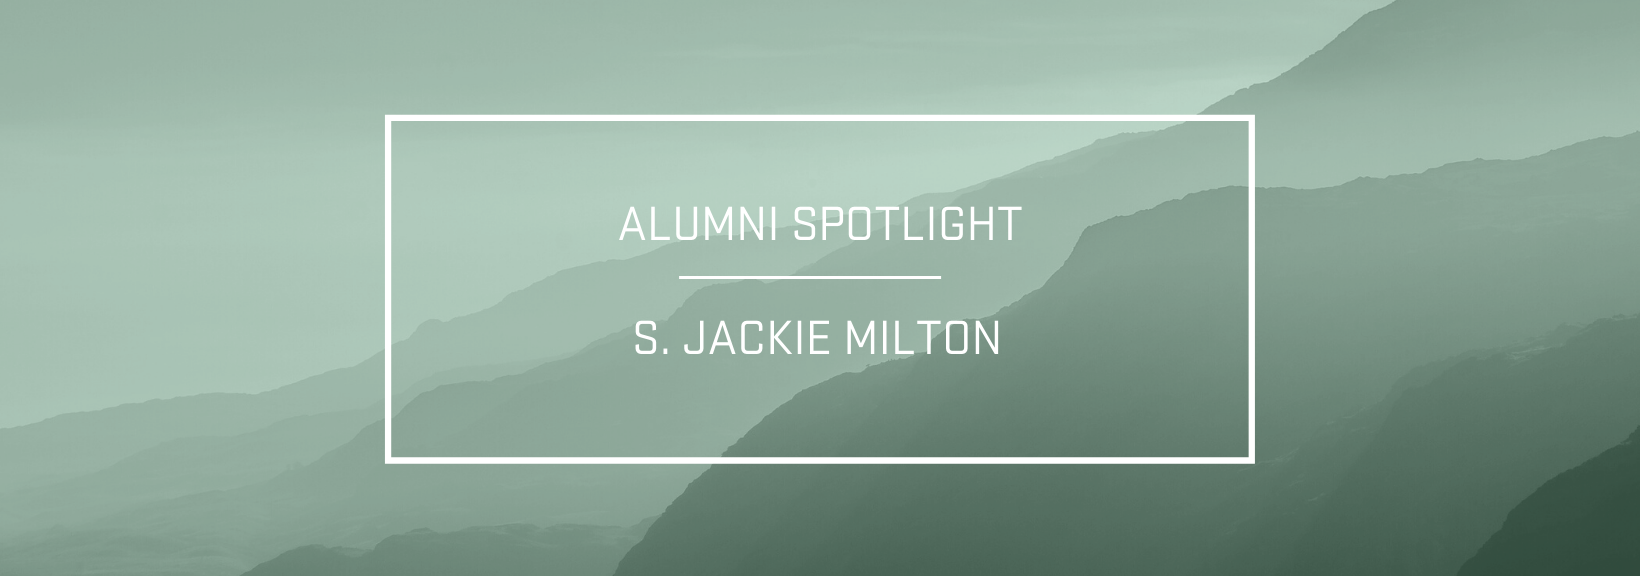 MPS Alumni Spotlight: S. Jackie Milton